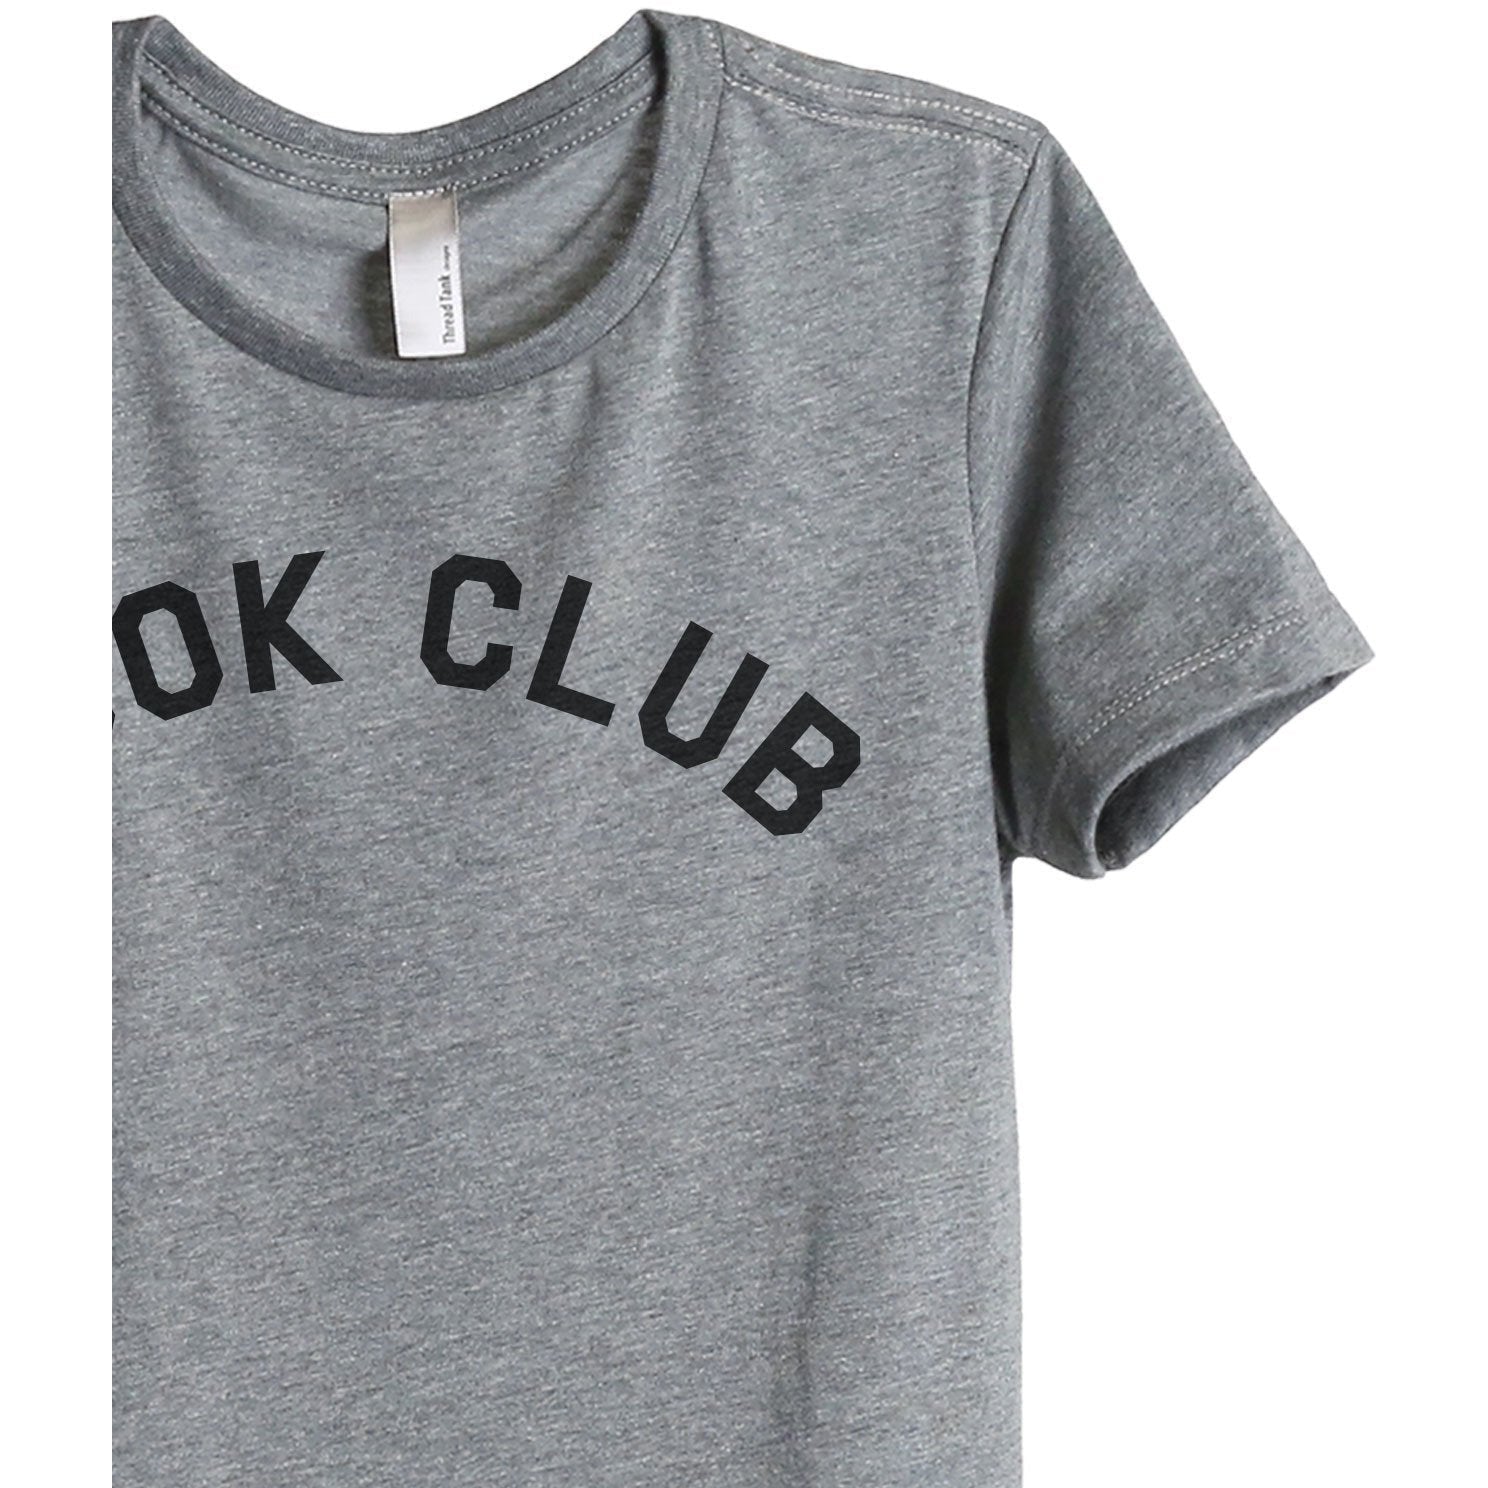 Book Club Women's Relaxed Crewneck T-Shirt Top Tee Heather Grey